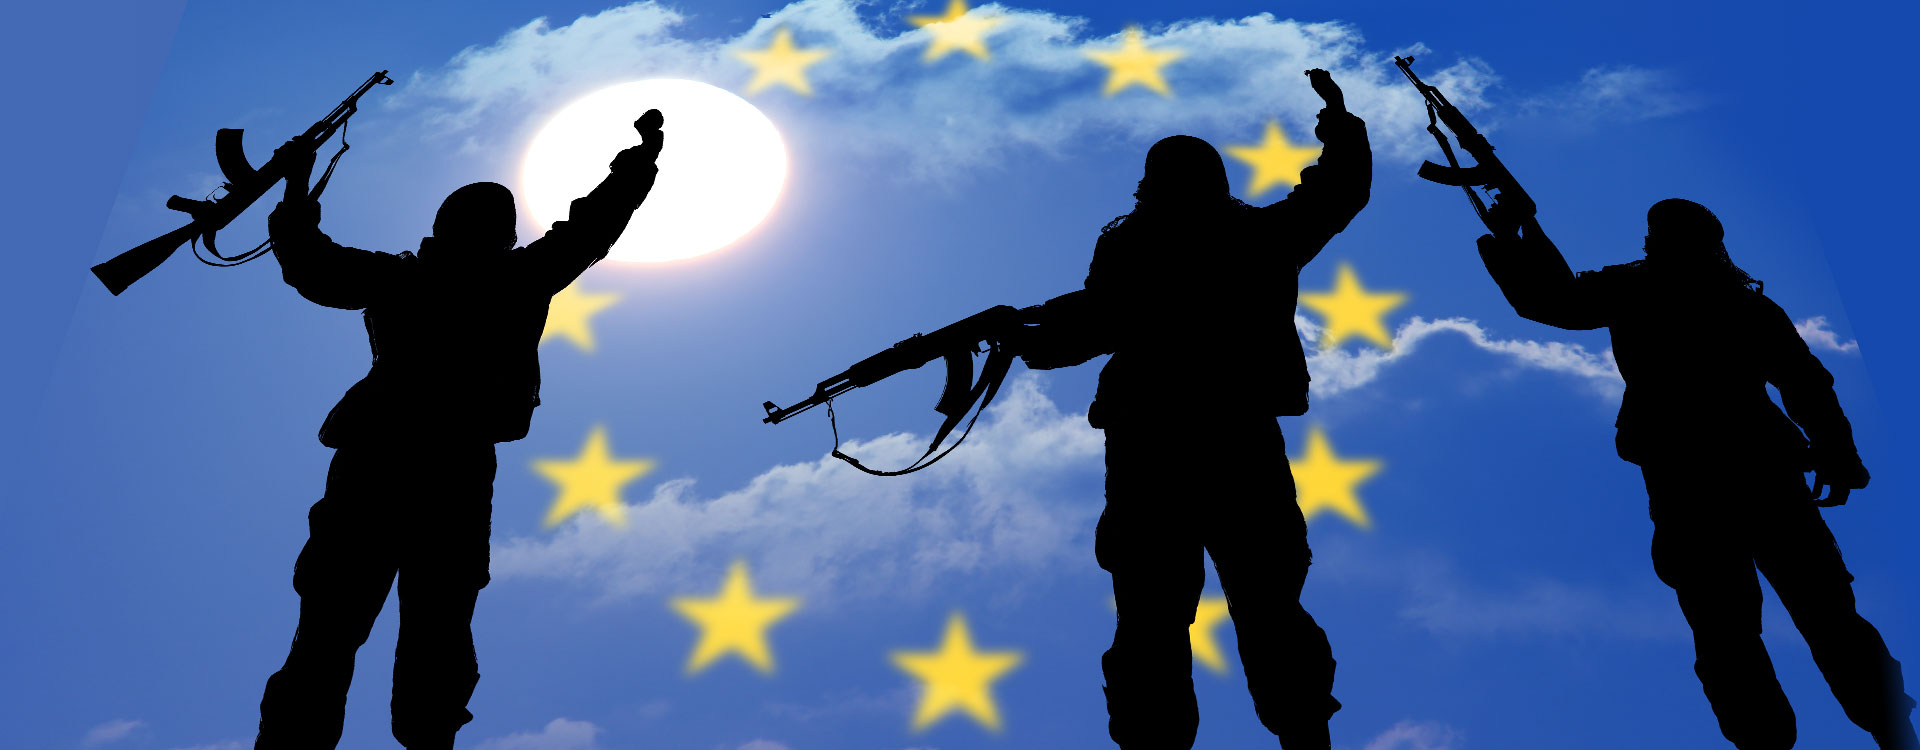 EU Military Independence | Tomorrow's World